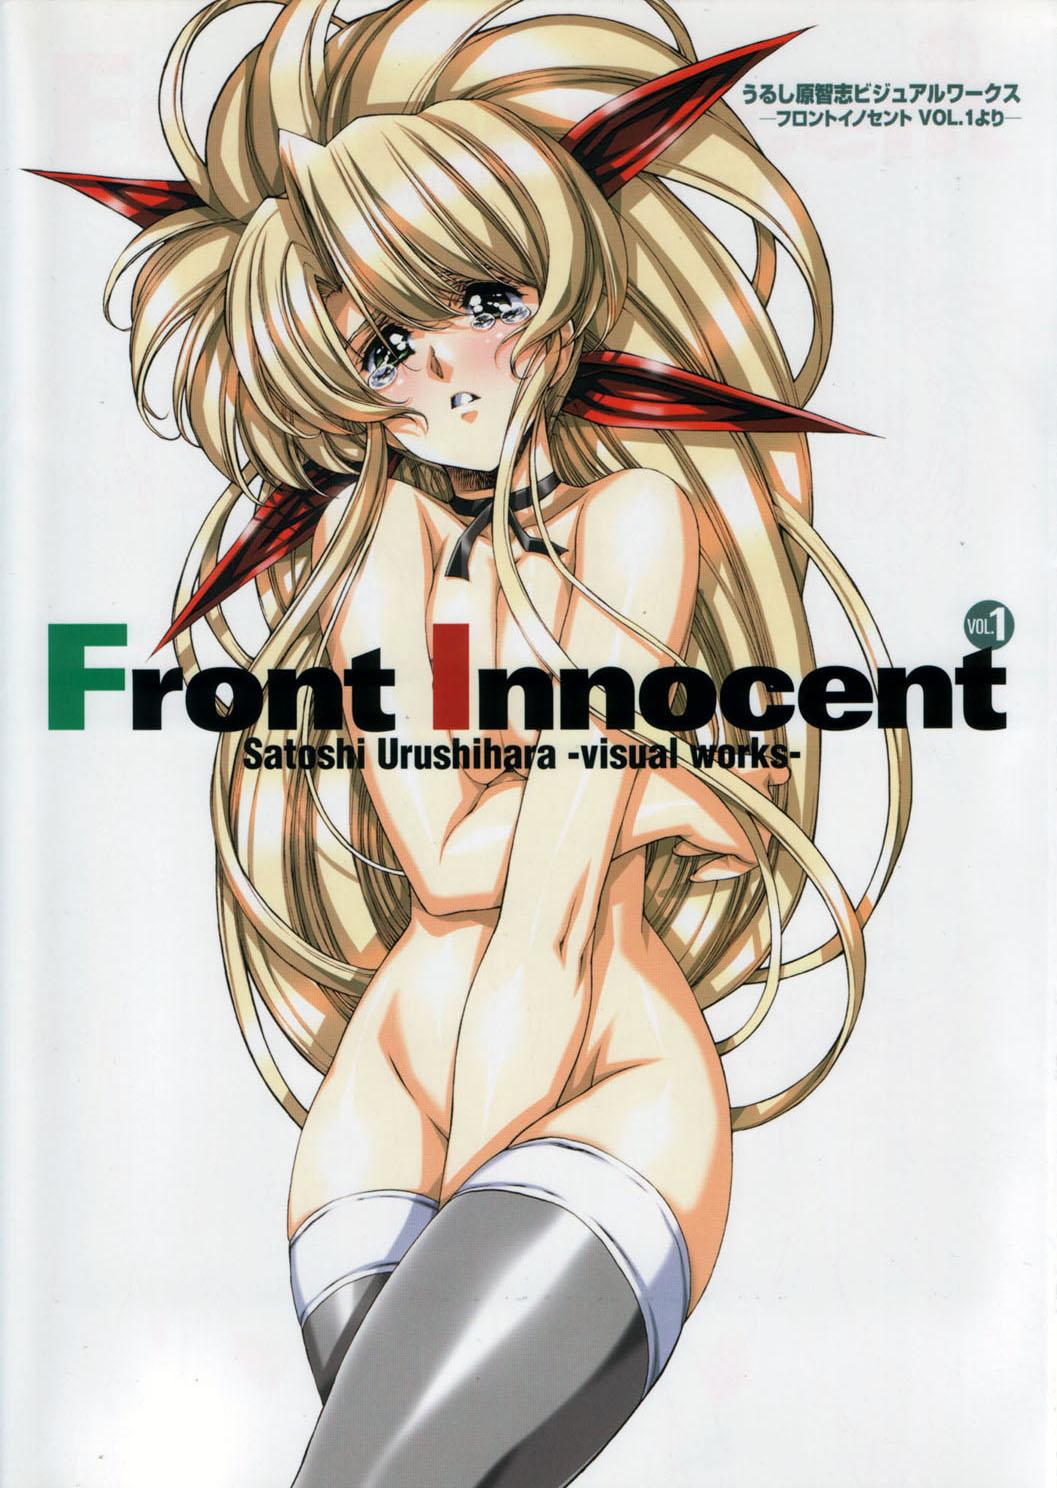 Gets Front Innocent #1: Satoshi Urushihara Visual Works - Another lady innocent Handjob - Page 2